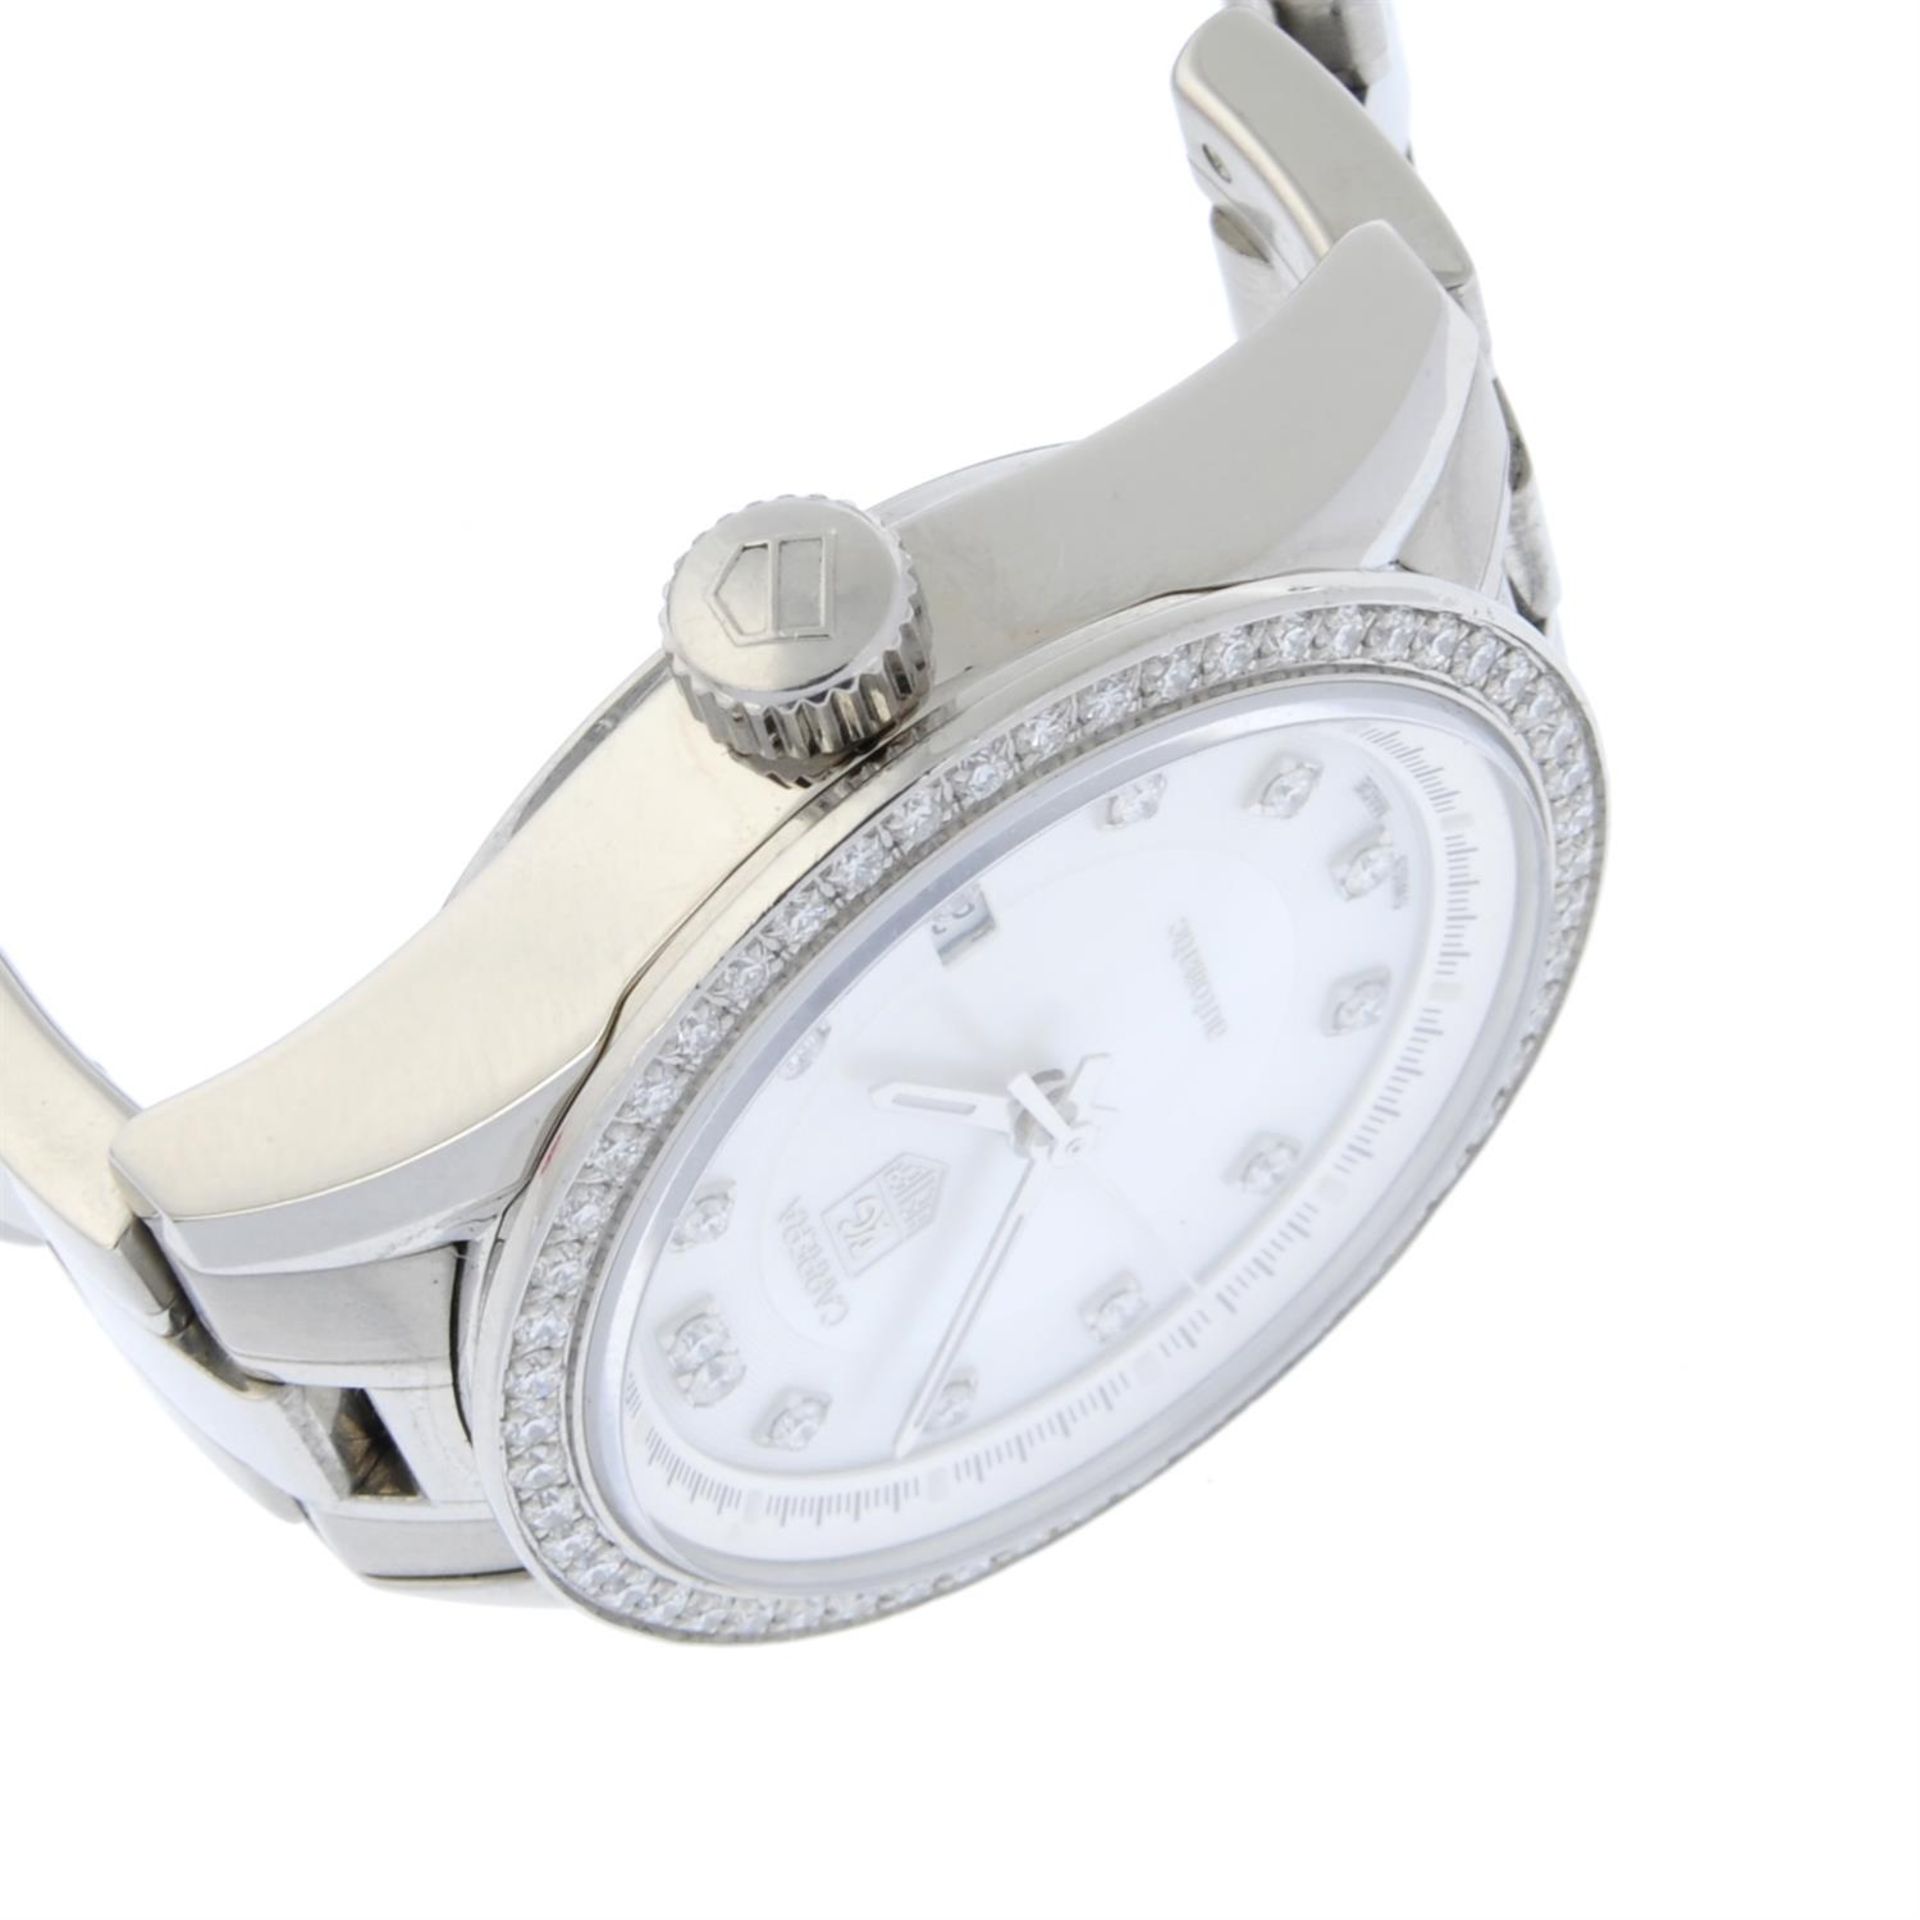 TAG HEUER - a stainless steel Carrera bracelet watch, 28mm. - Bild 3 aus 4